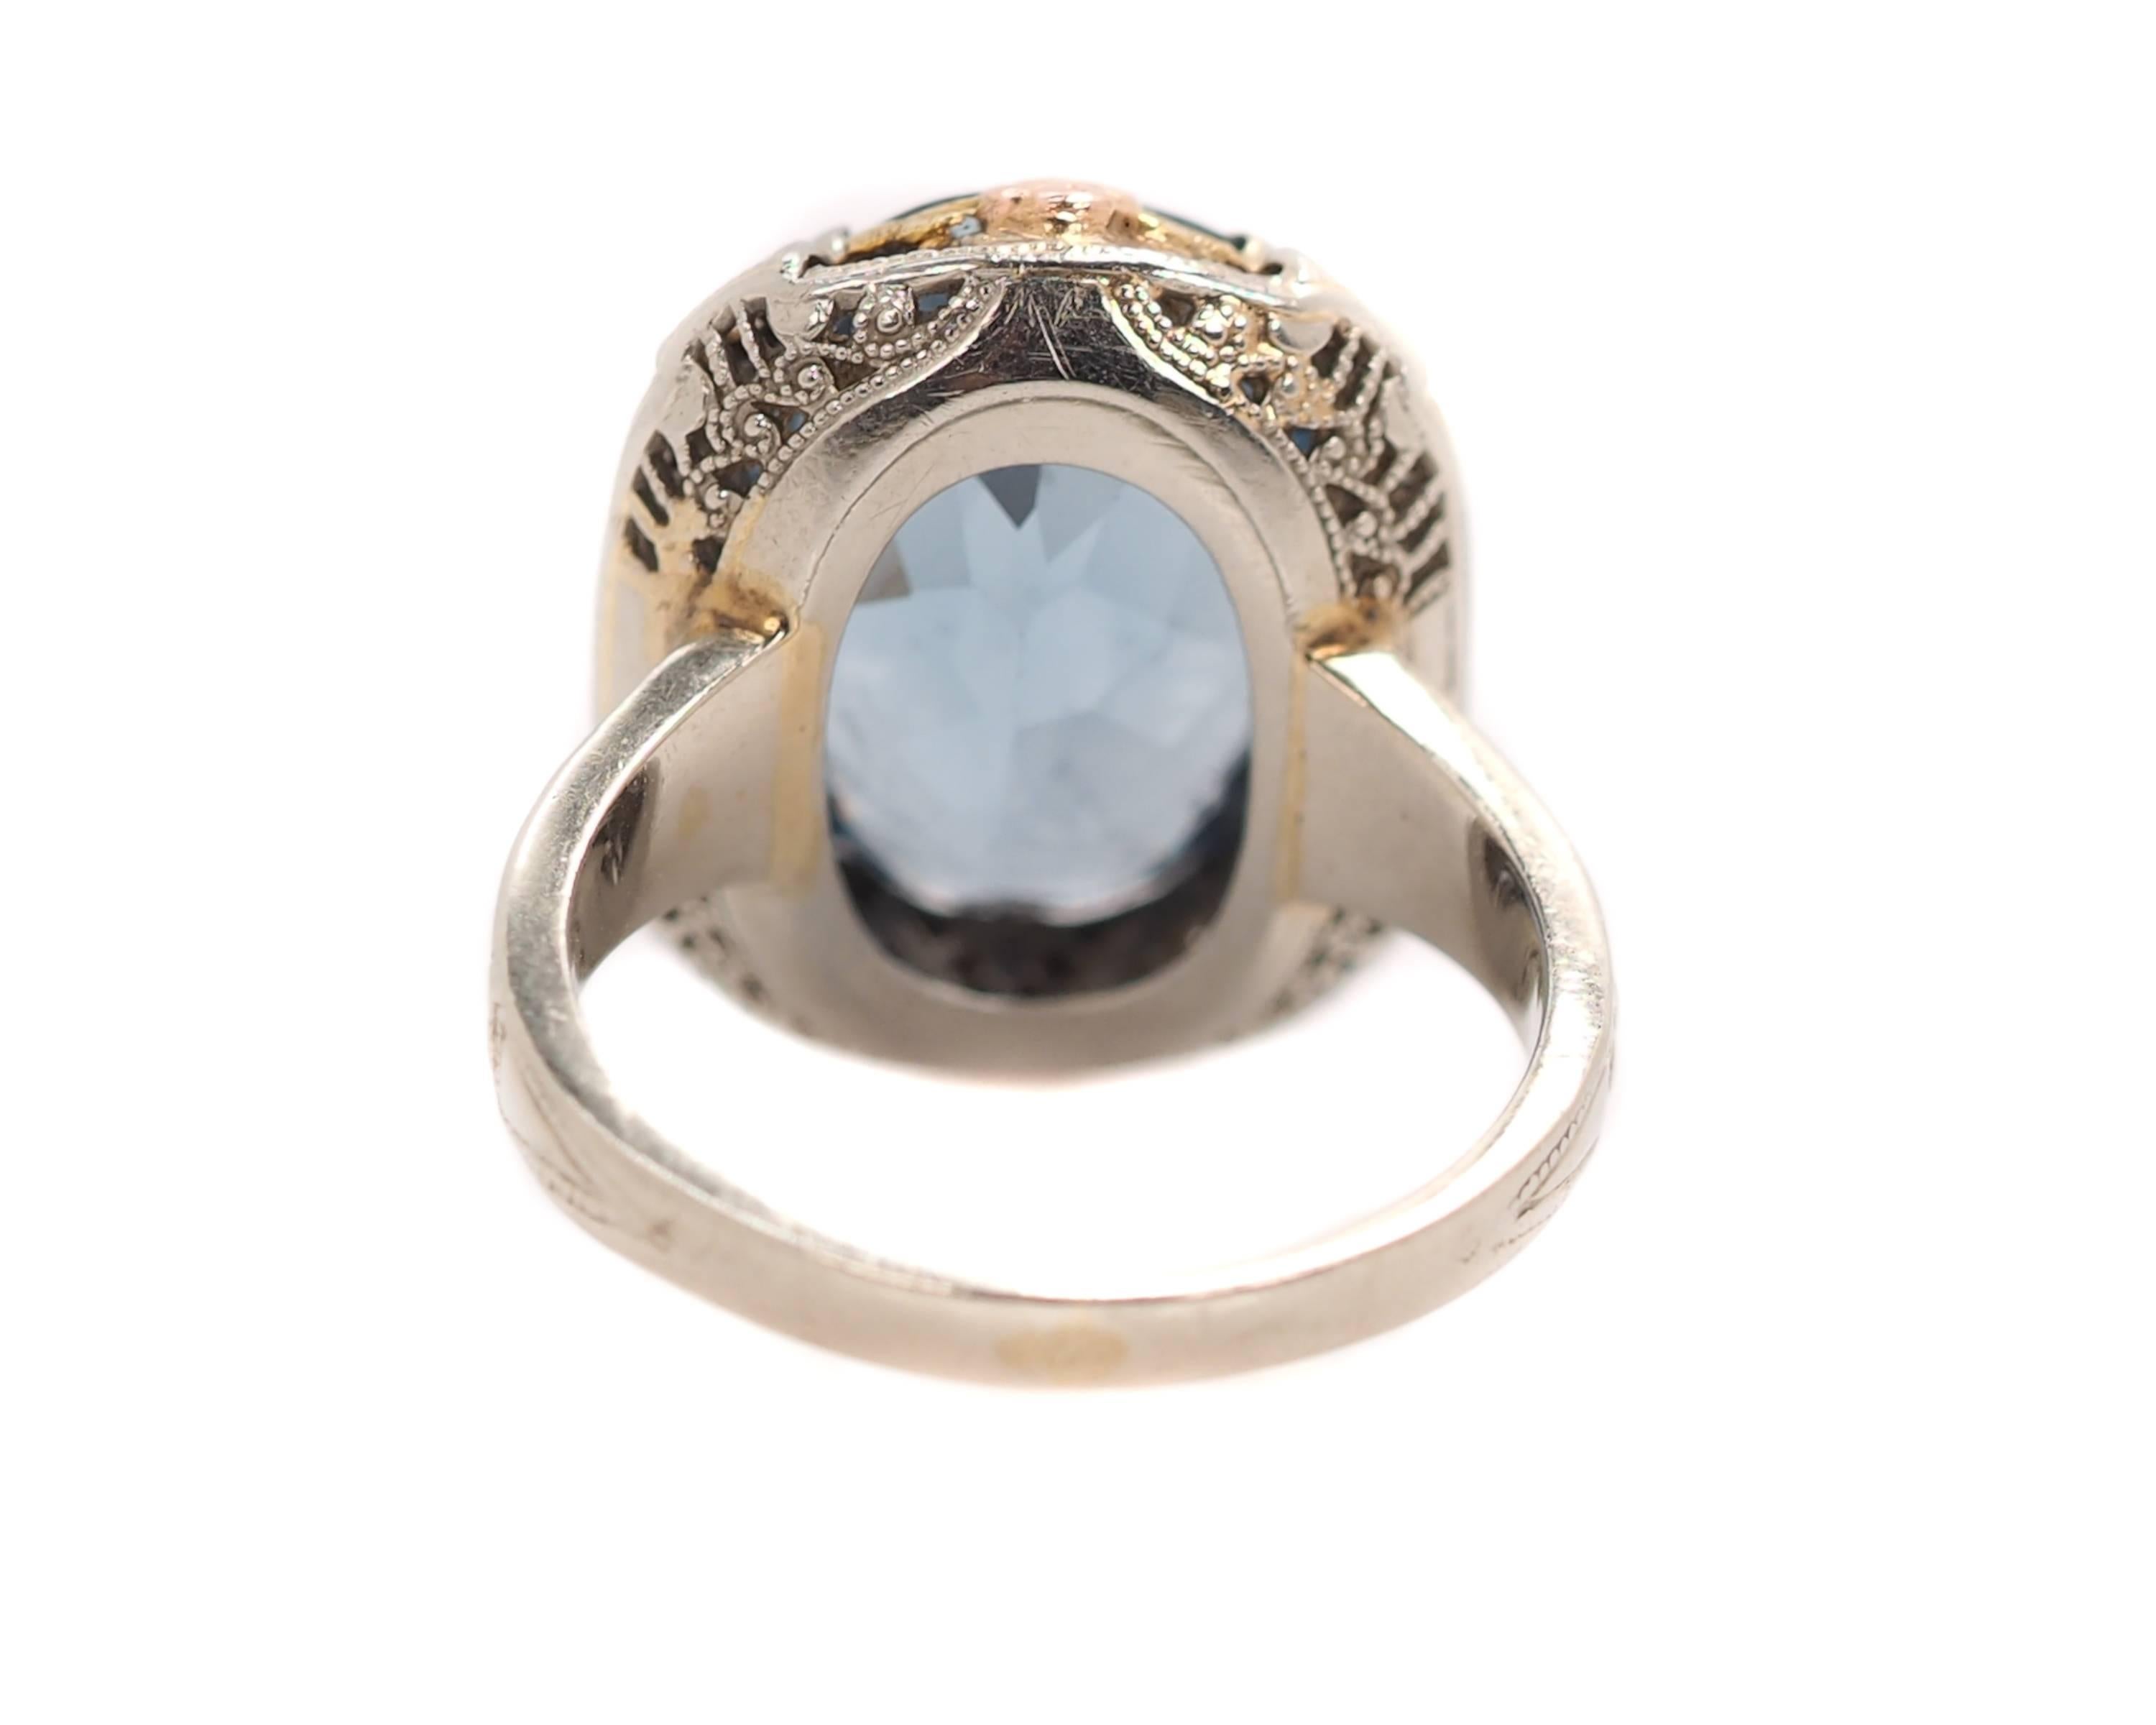 5 carat blue topaz ring